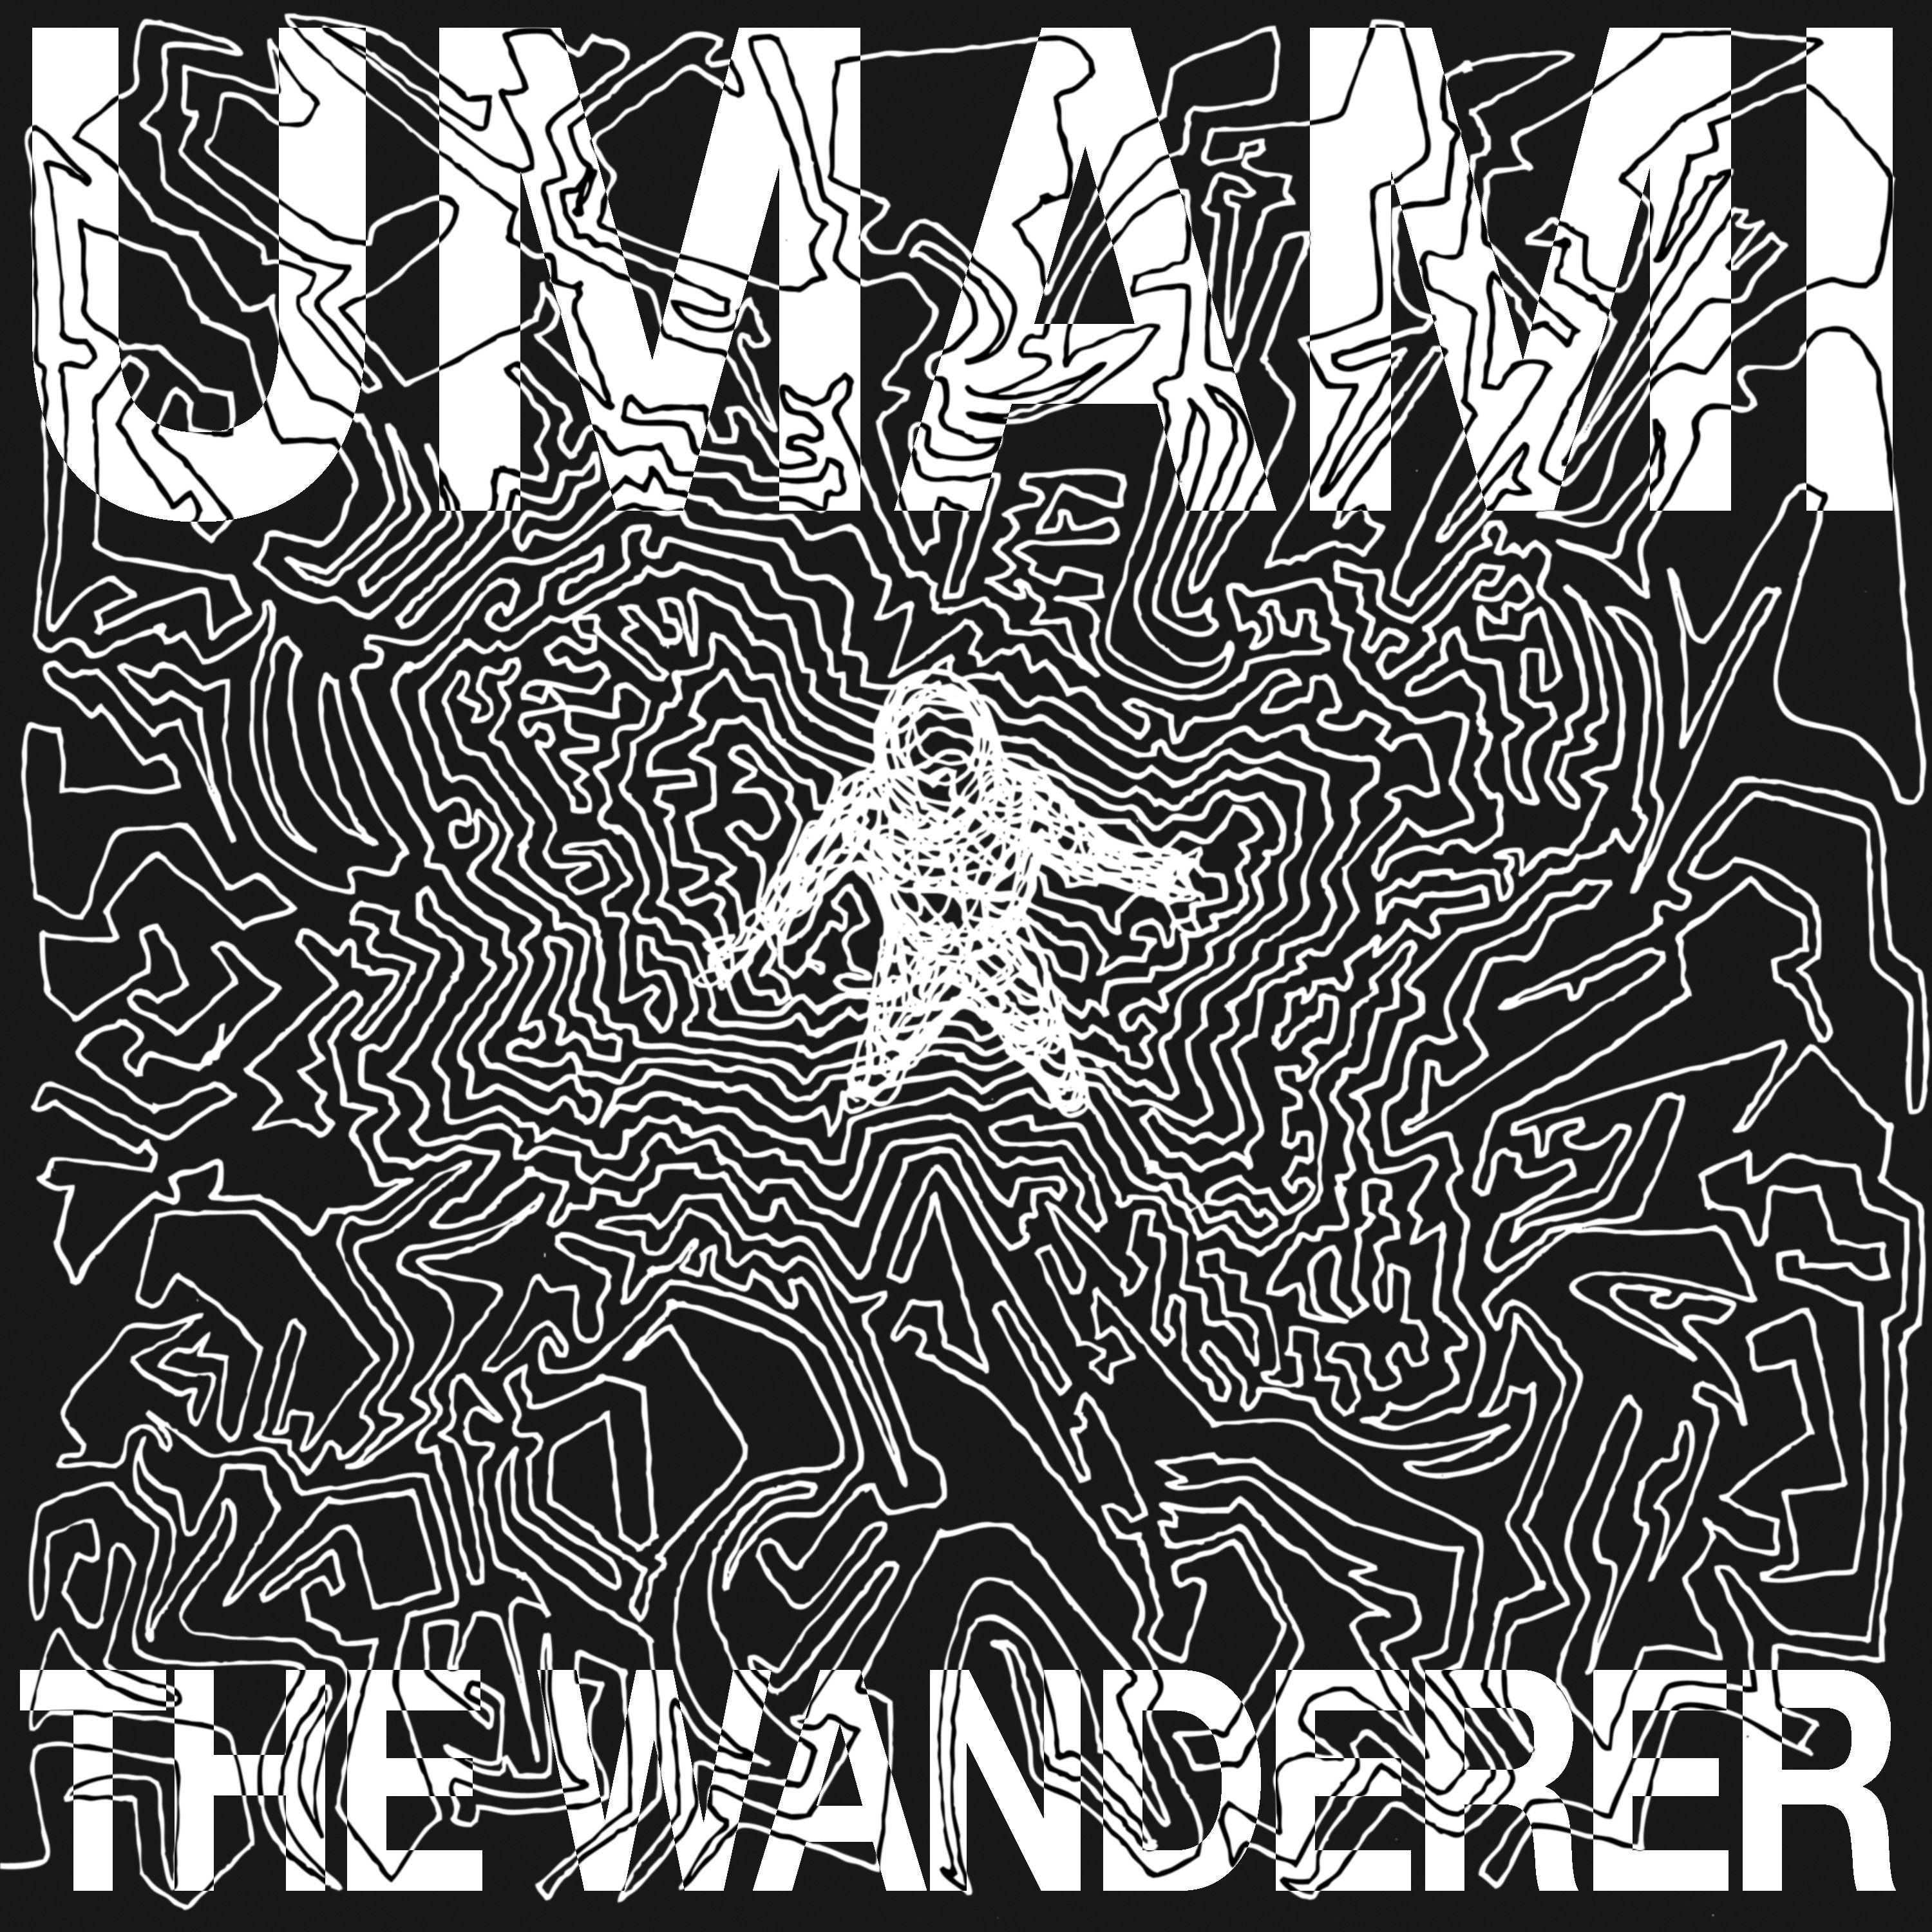 Umami - It's Burning